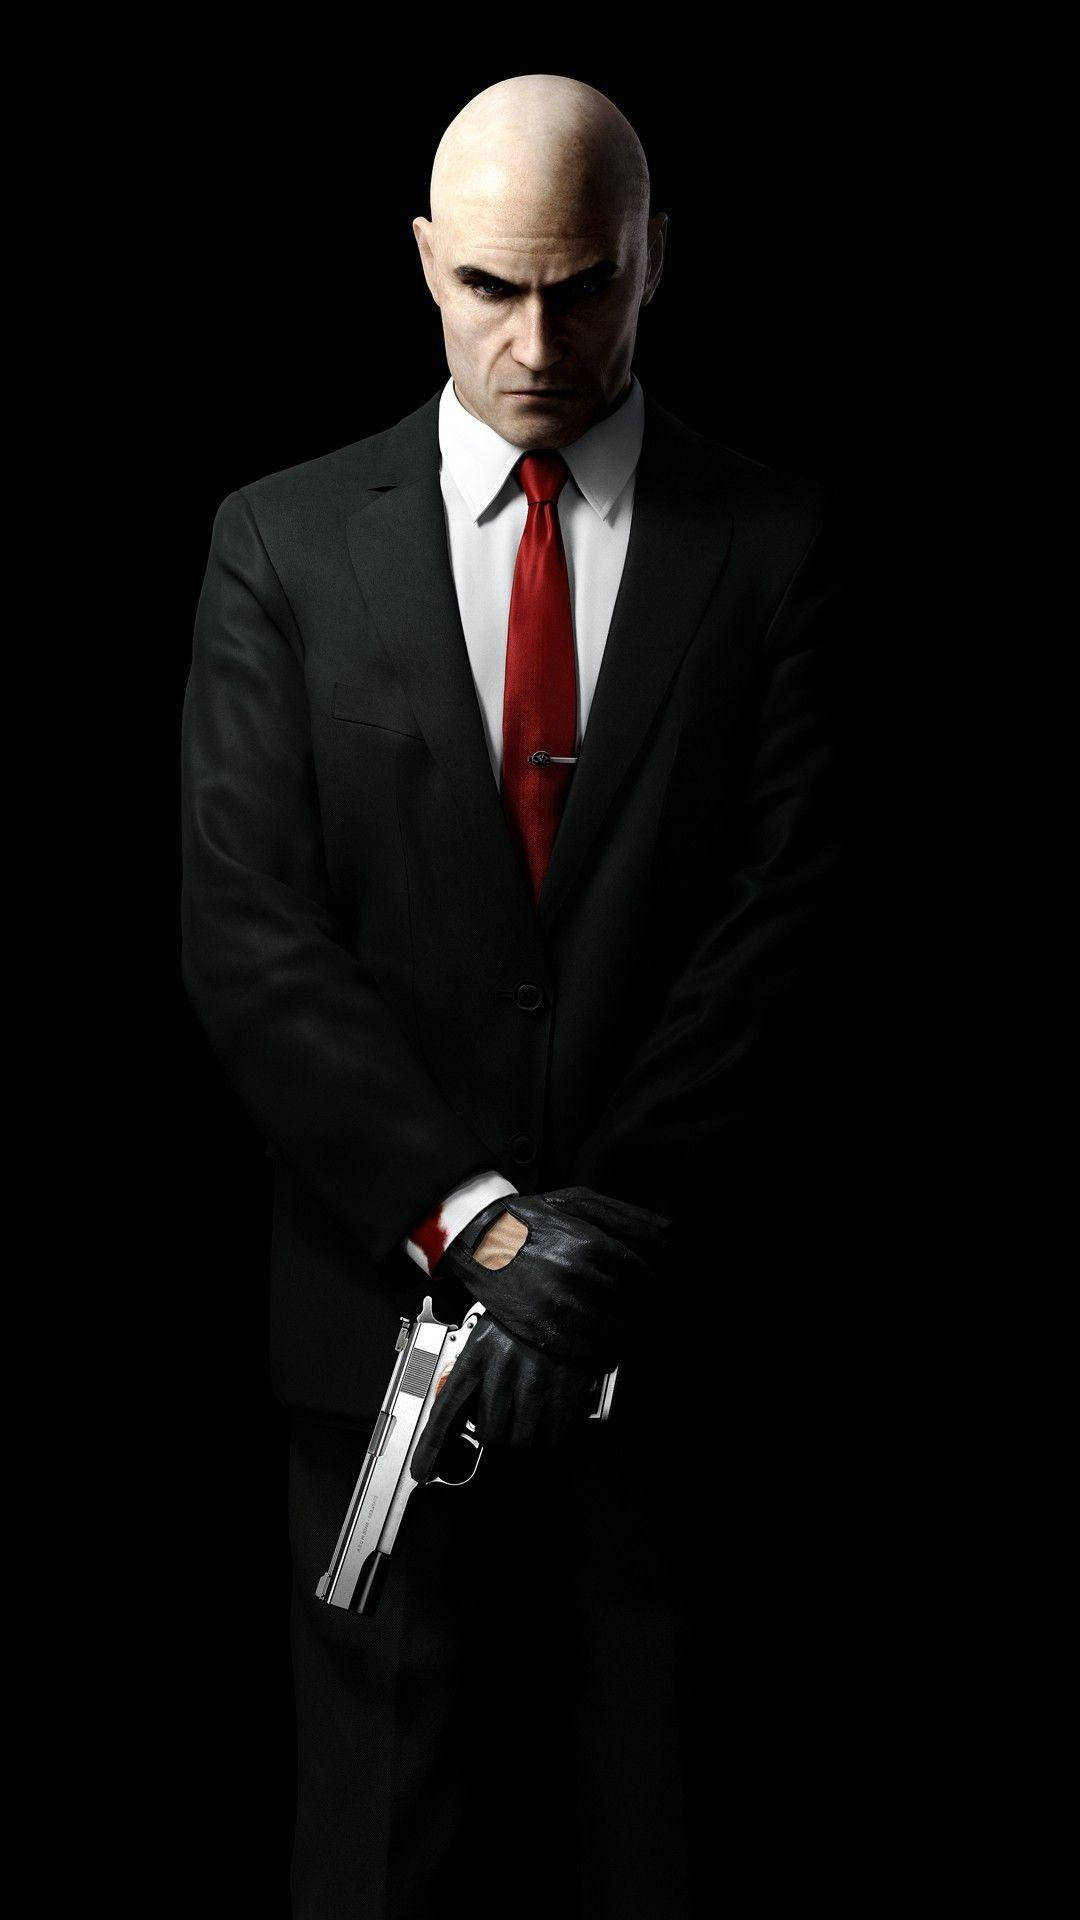 En mand i en jakkesæt og slips, der holder et gevær. Wallpaper